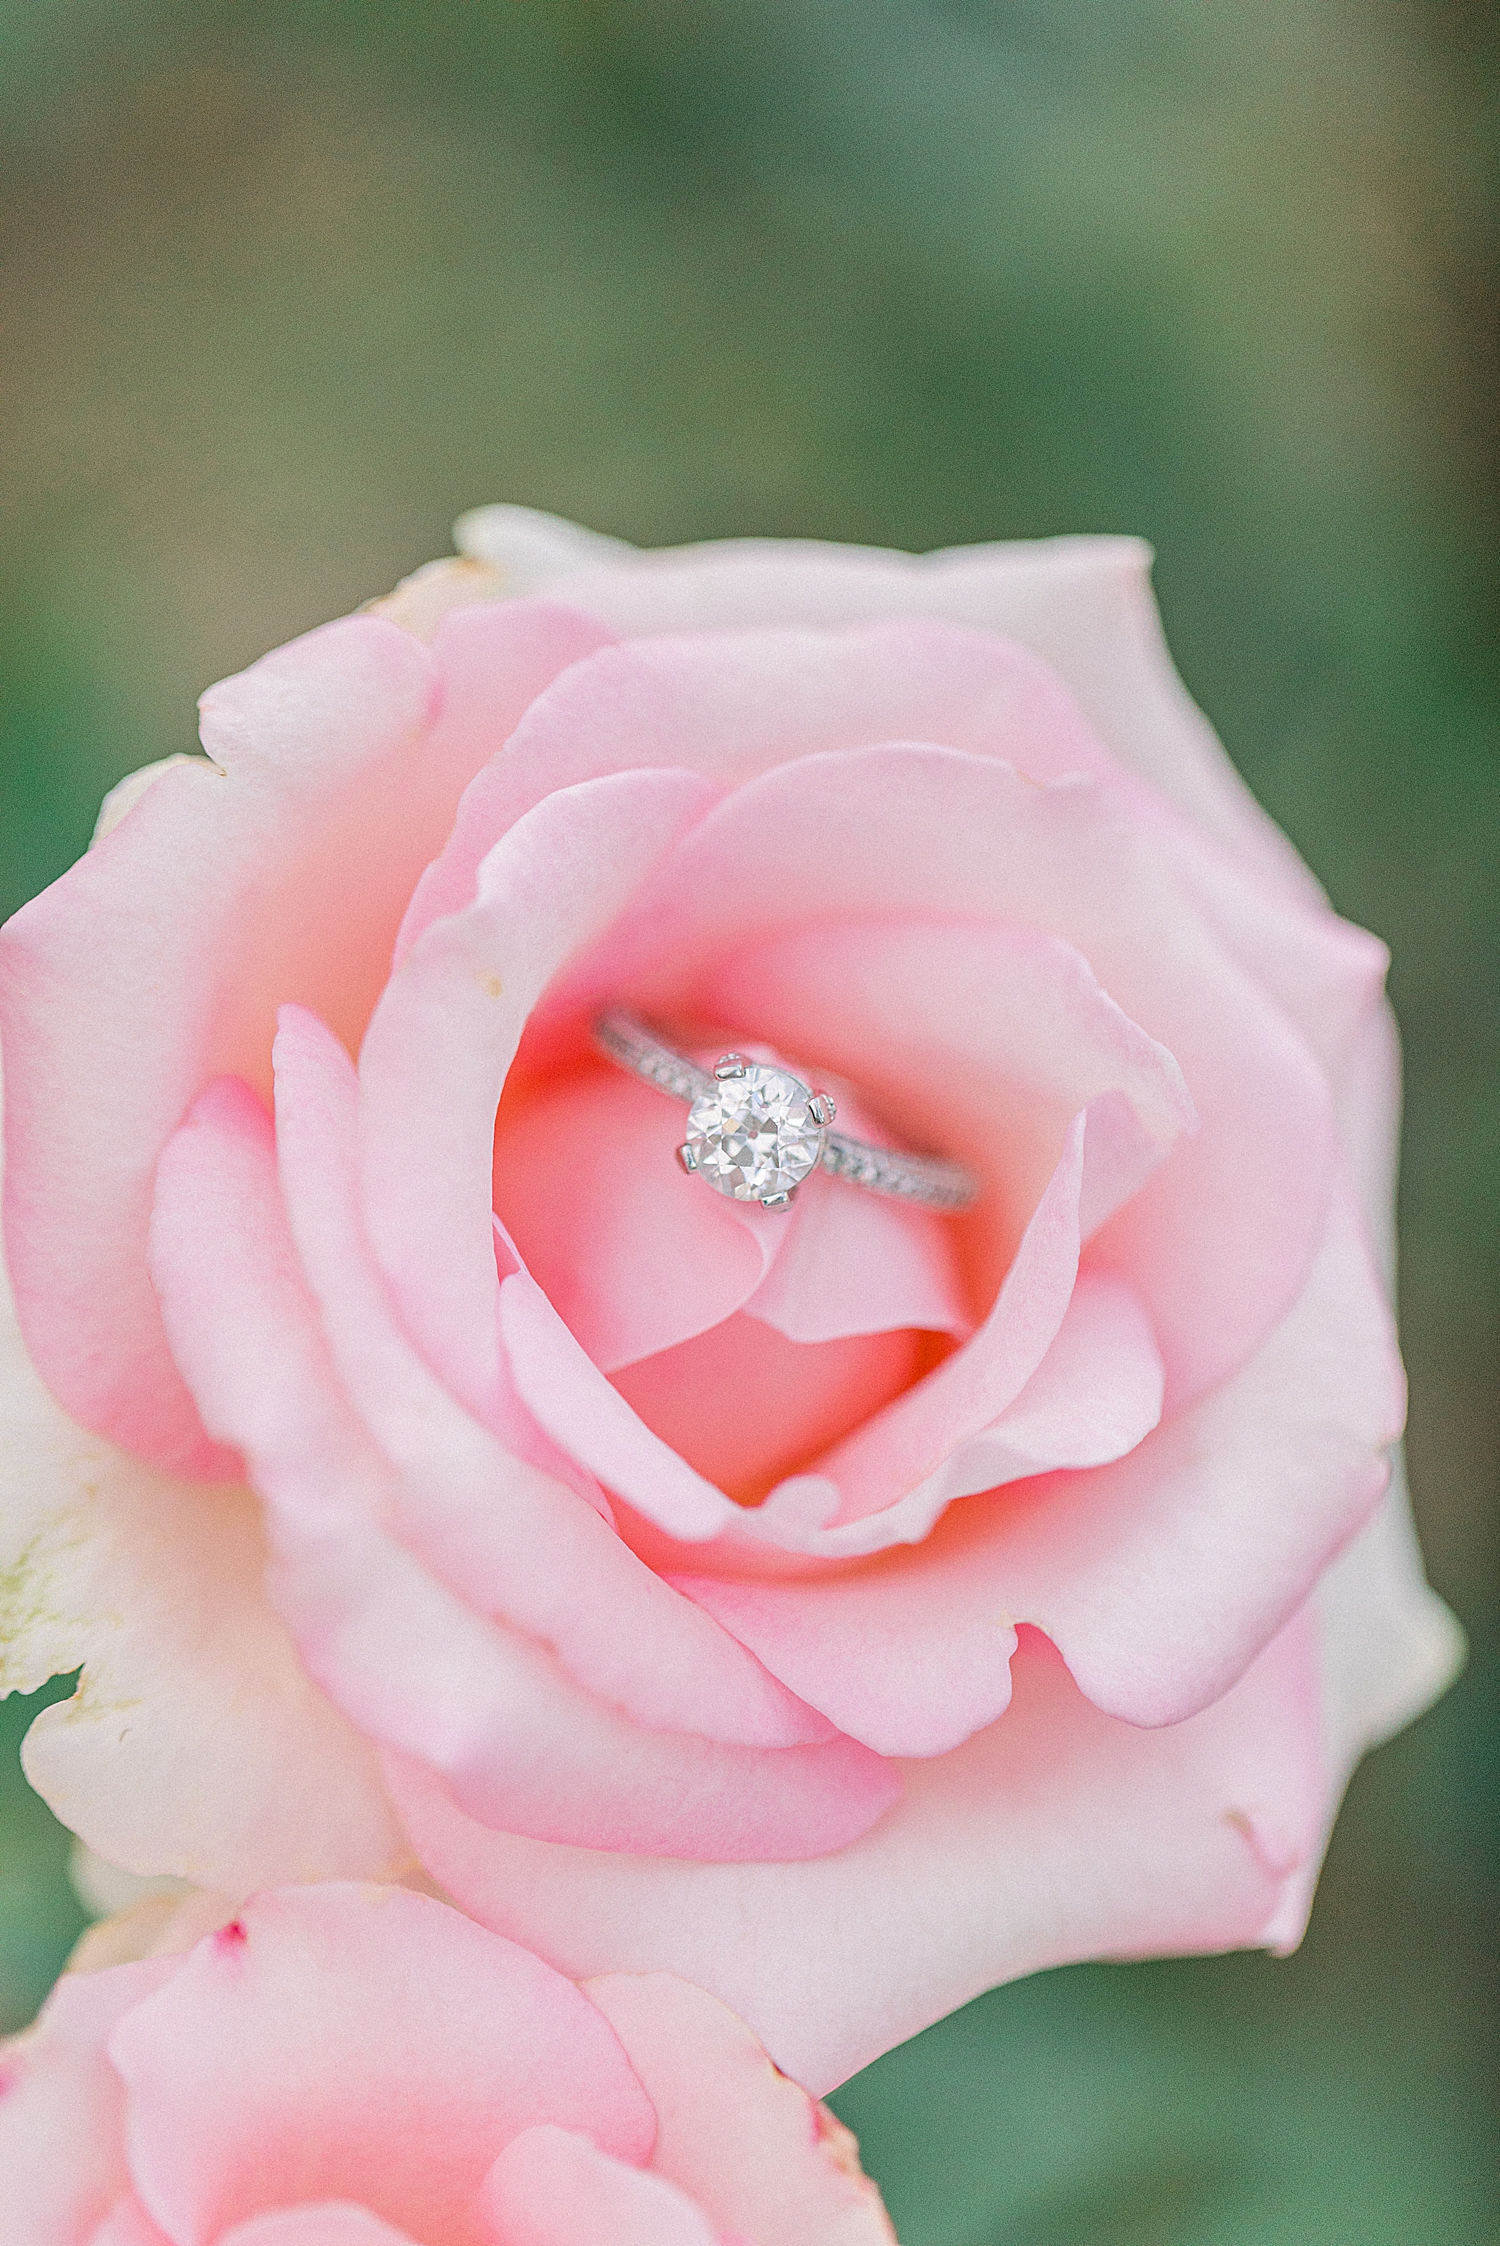 engagement ring on pink rose